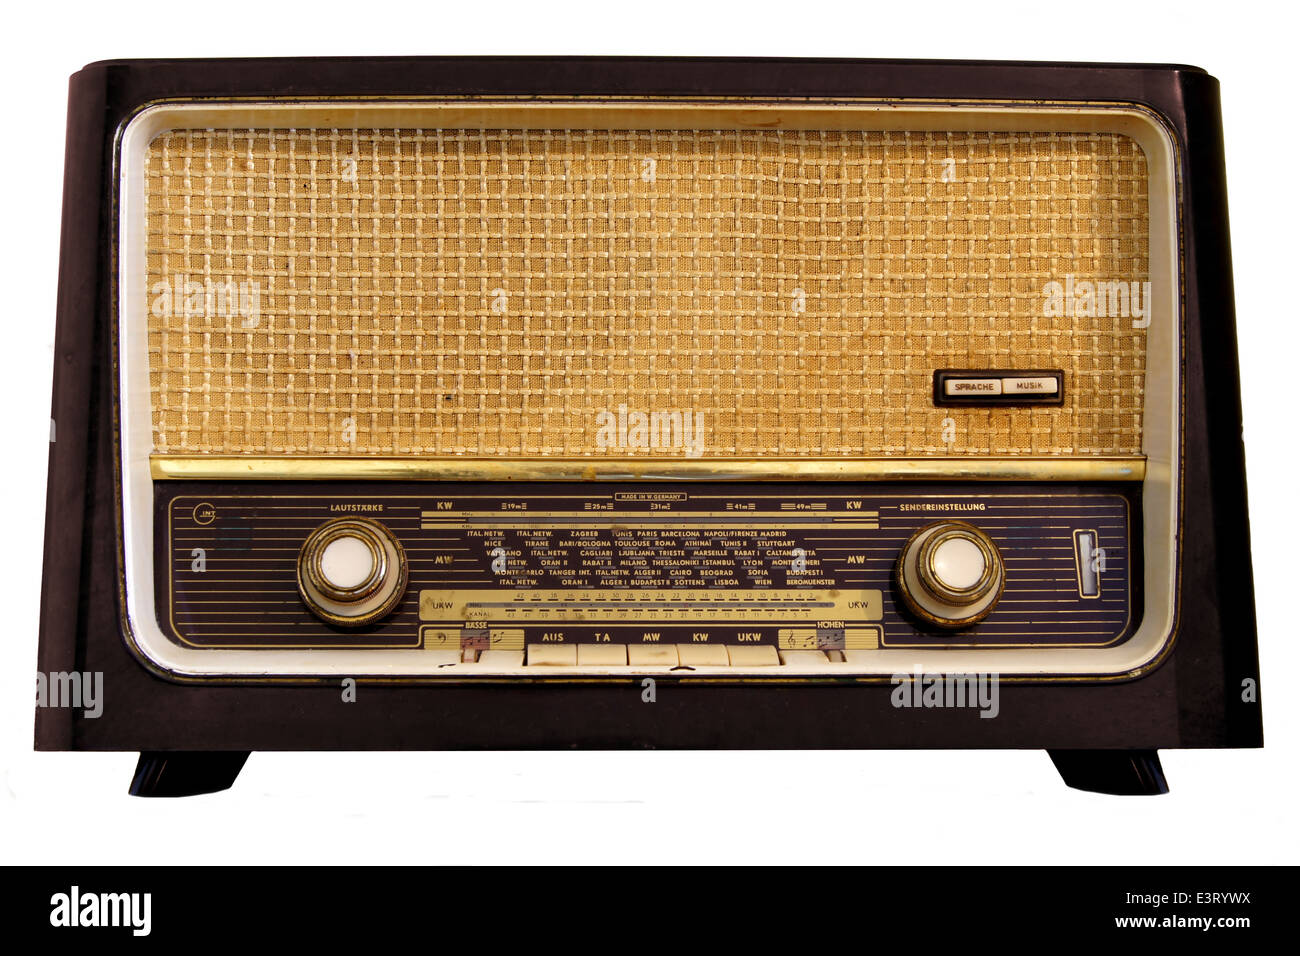 Radio Vintage isolato su uno sfondo bianco Foto stock - Alamy